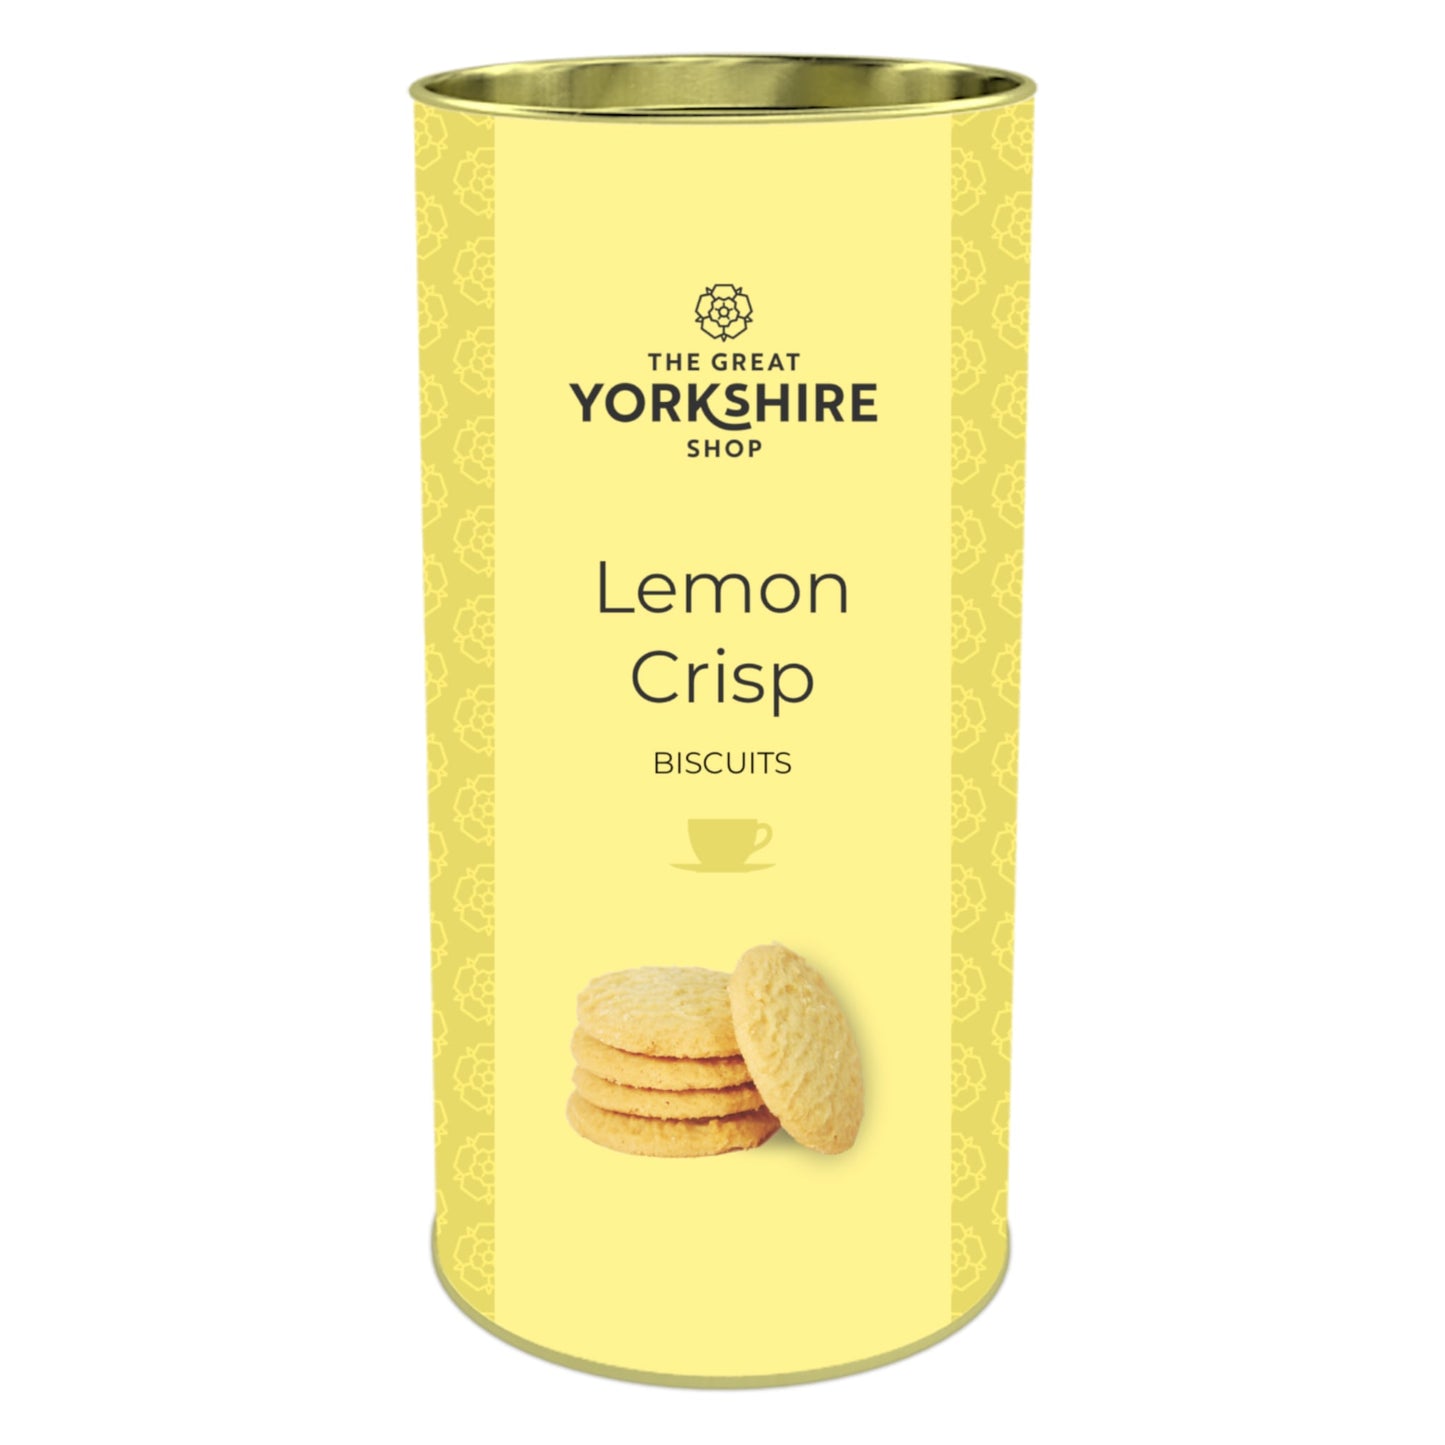 Lemon Crisp Biscuits - The Great Yorkshire Shop